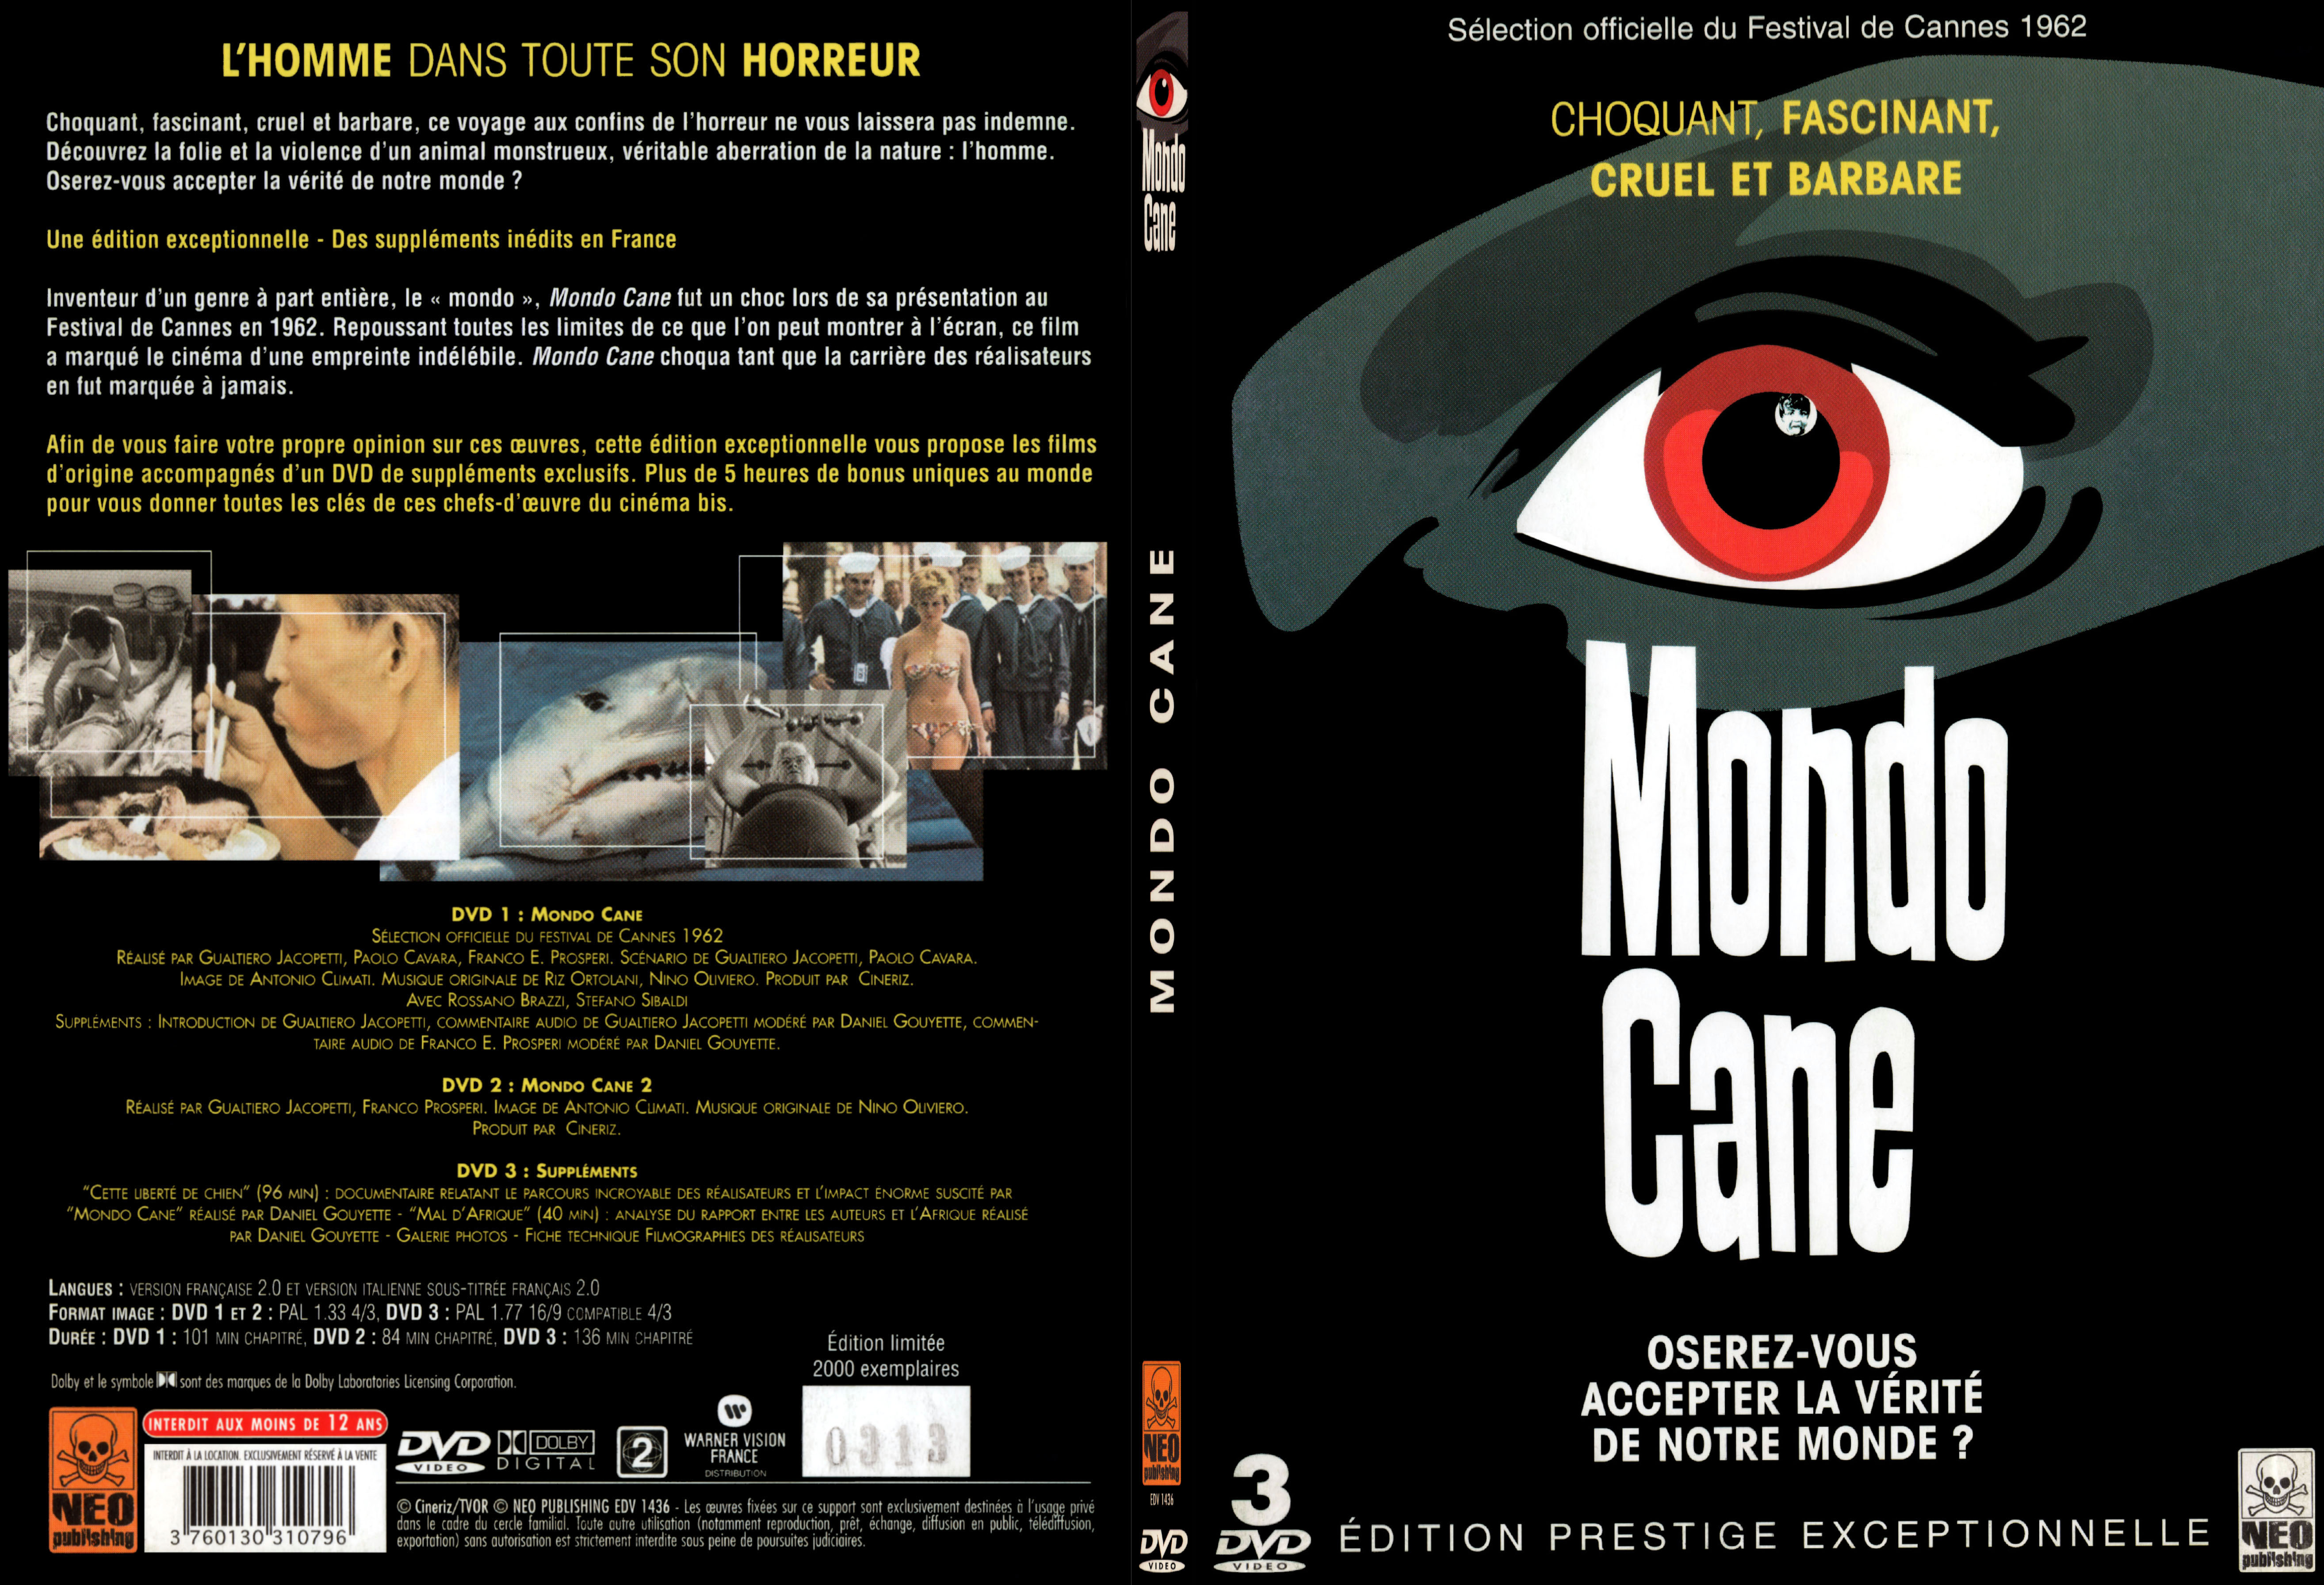 Jaquette DVD Mondo cane - SLIM